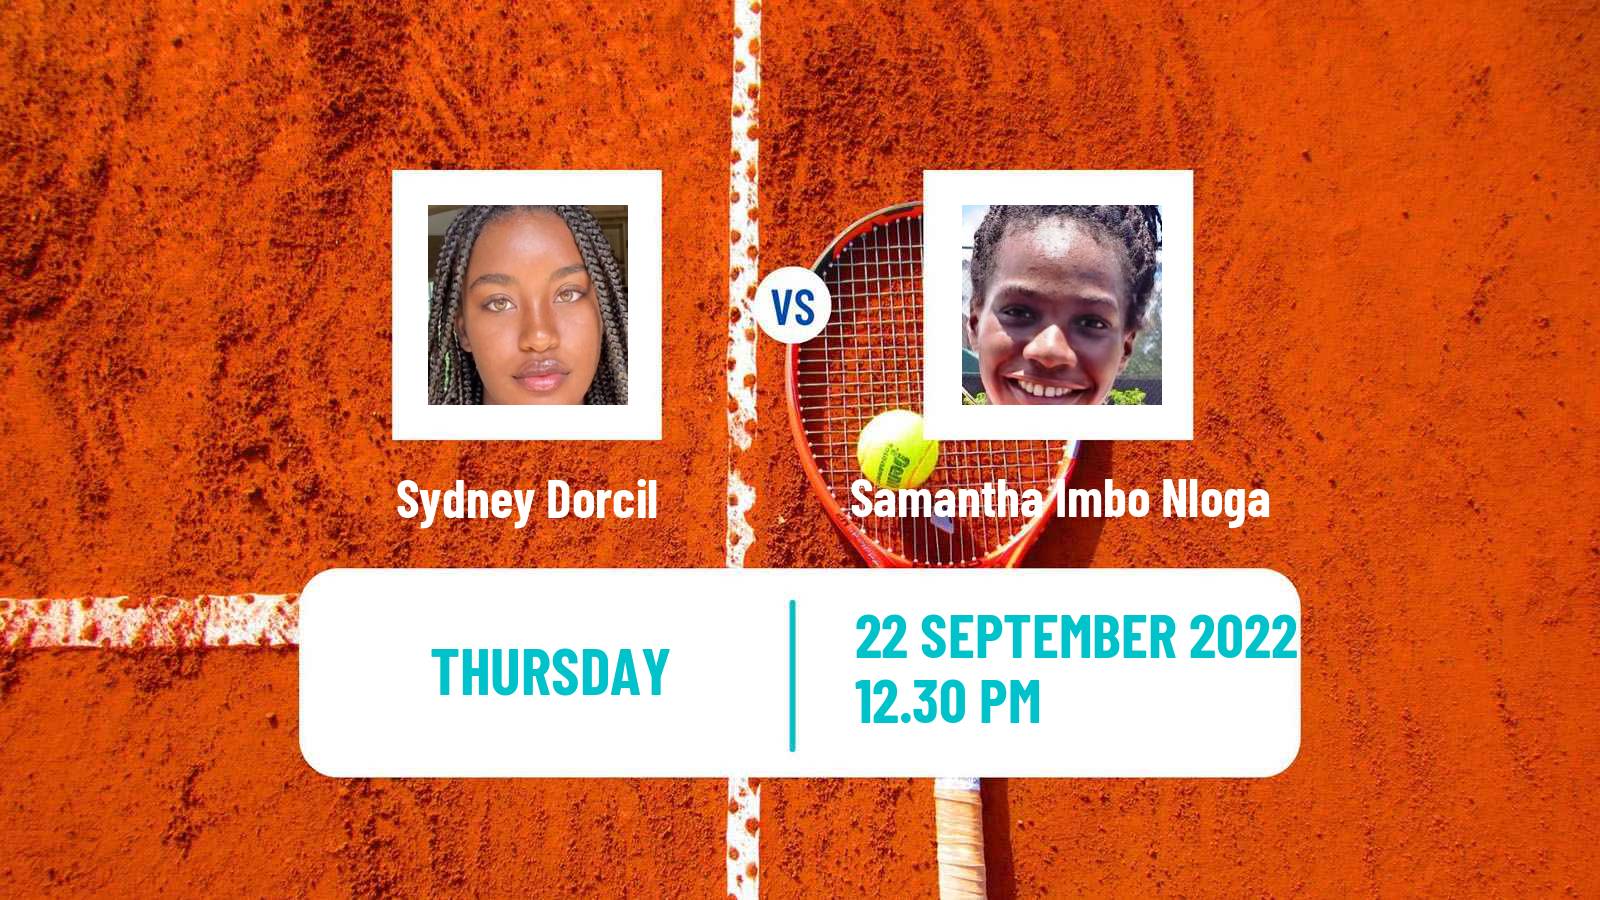 Tennis ITF Tournaments Sydney Dorcil - Samantha Imbo Nloga